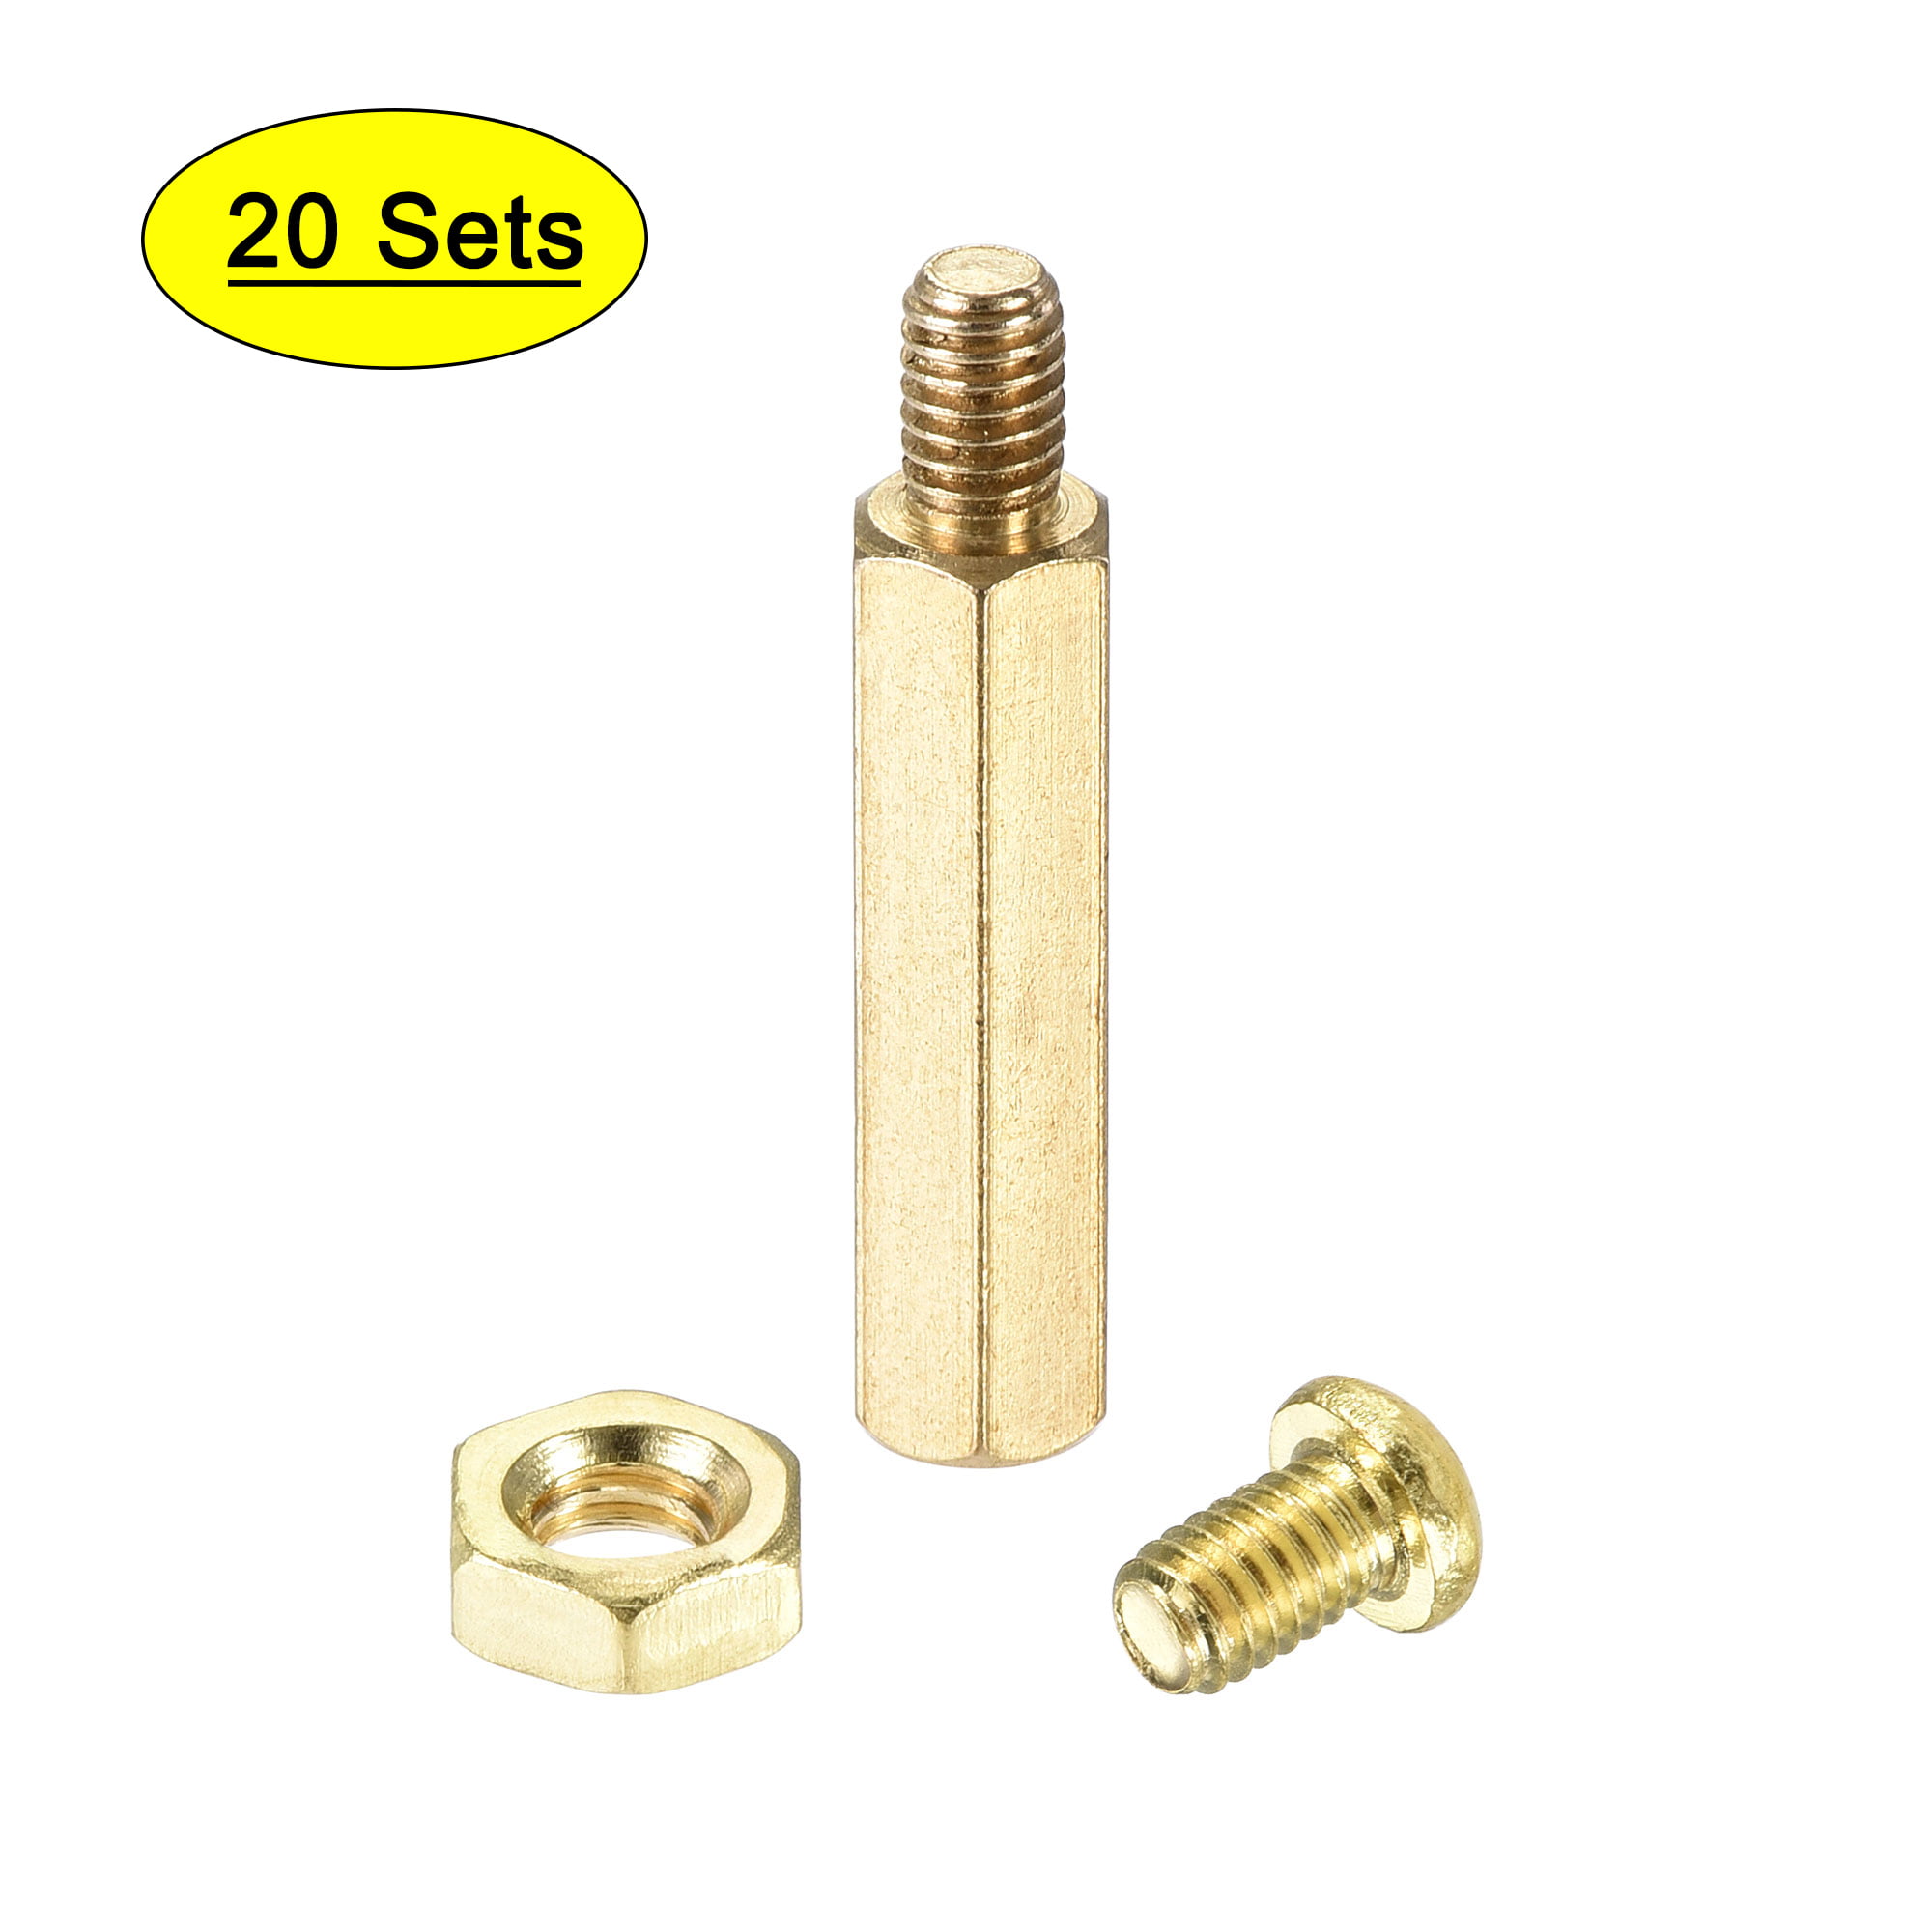 Uxcell Brass Male-Female Hex Standoff Screw Nut Kit 20 Sets 16mm+6mm 